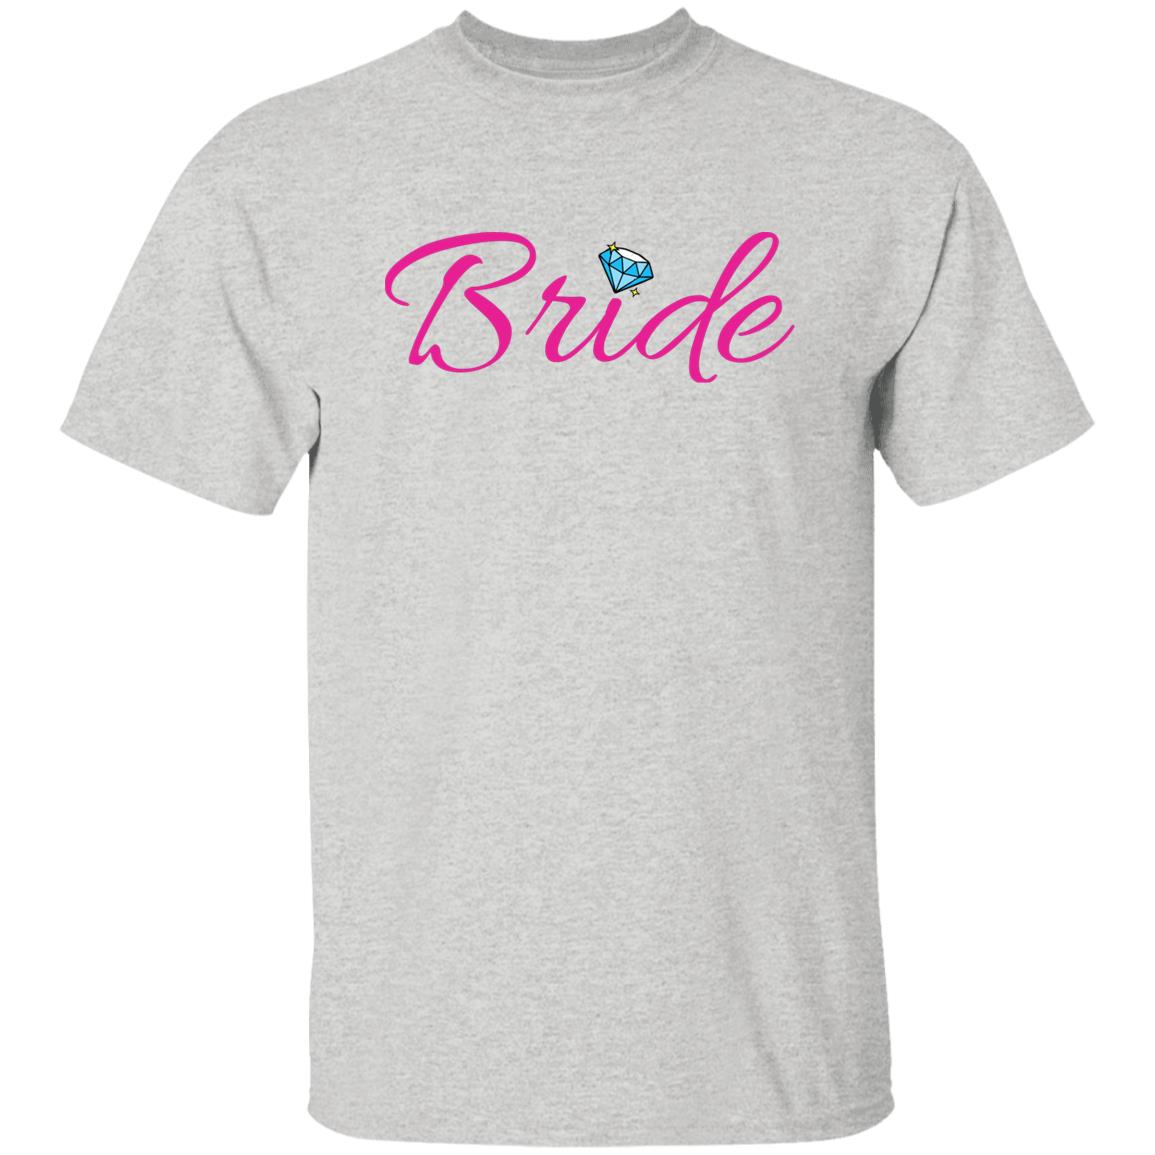 Bride (Pink Print) G500 5.3 oz. T-Shirt